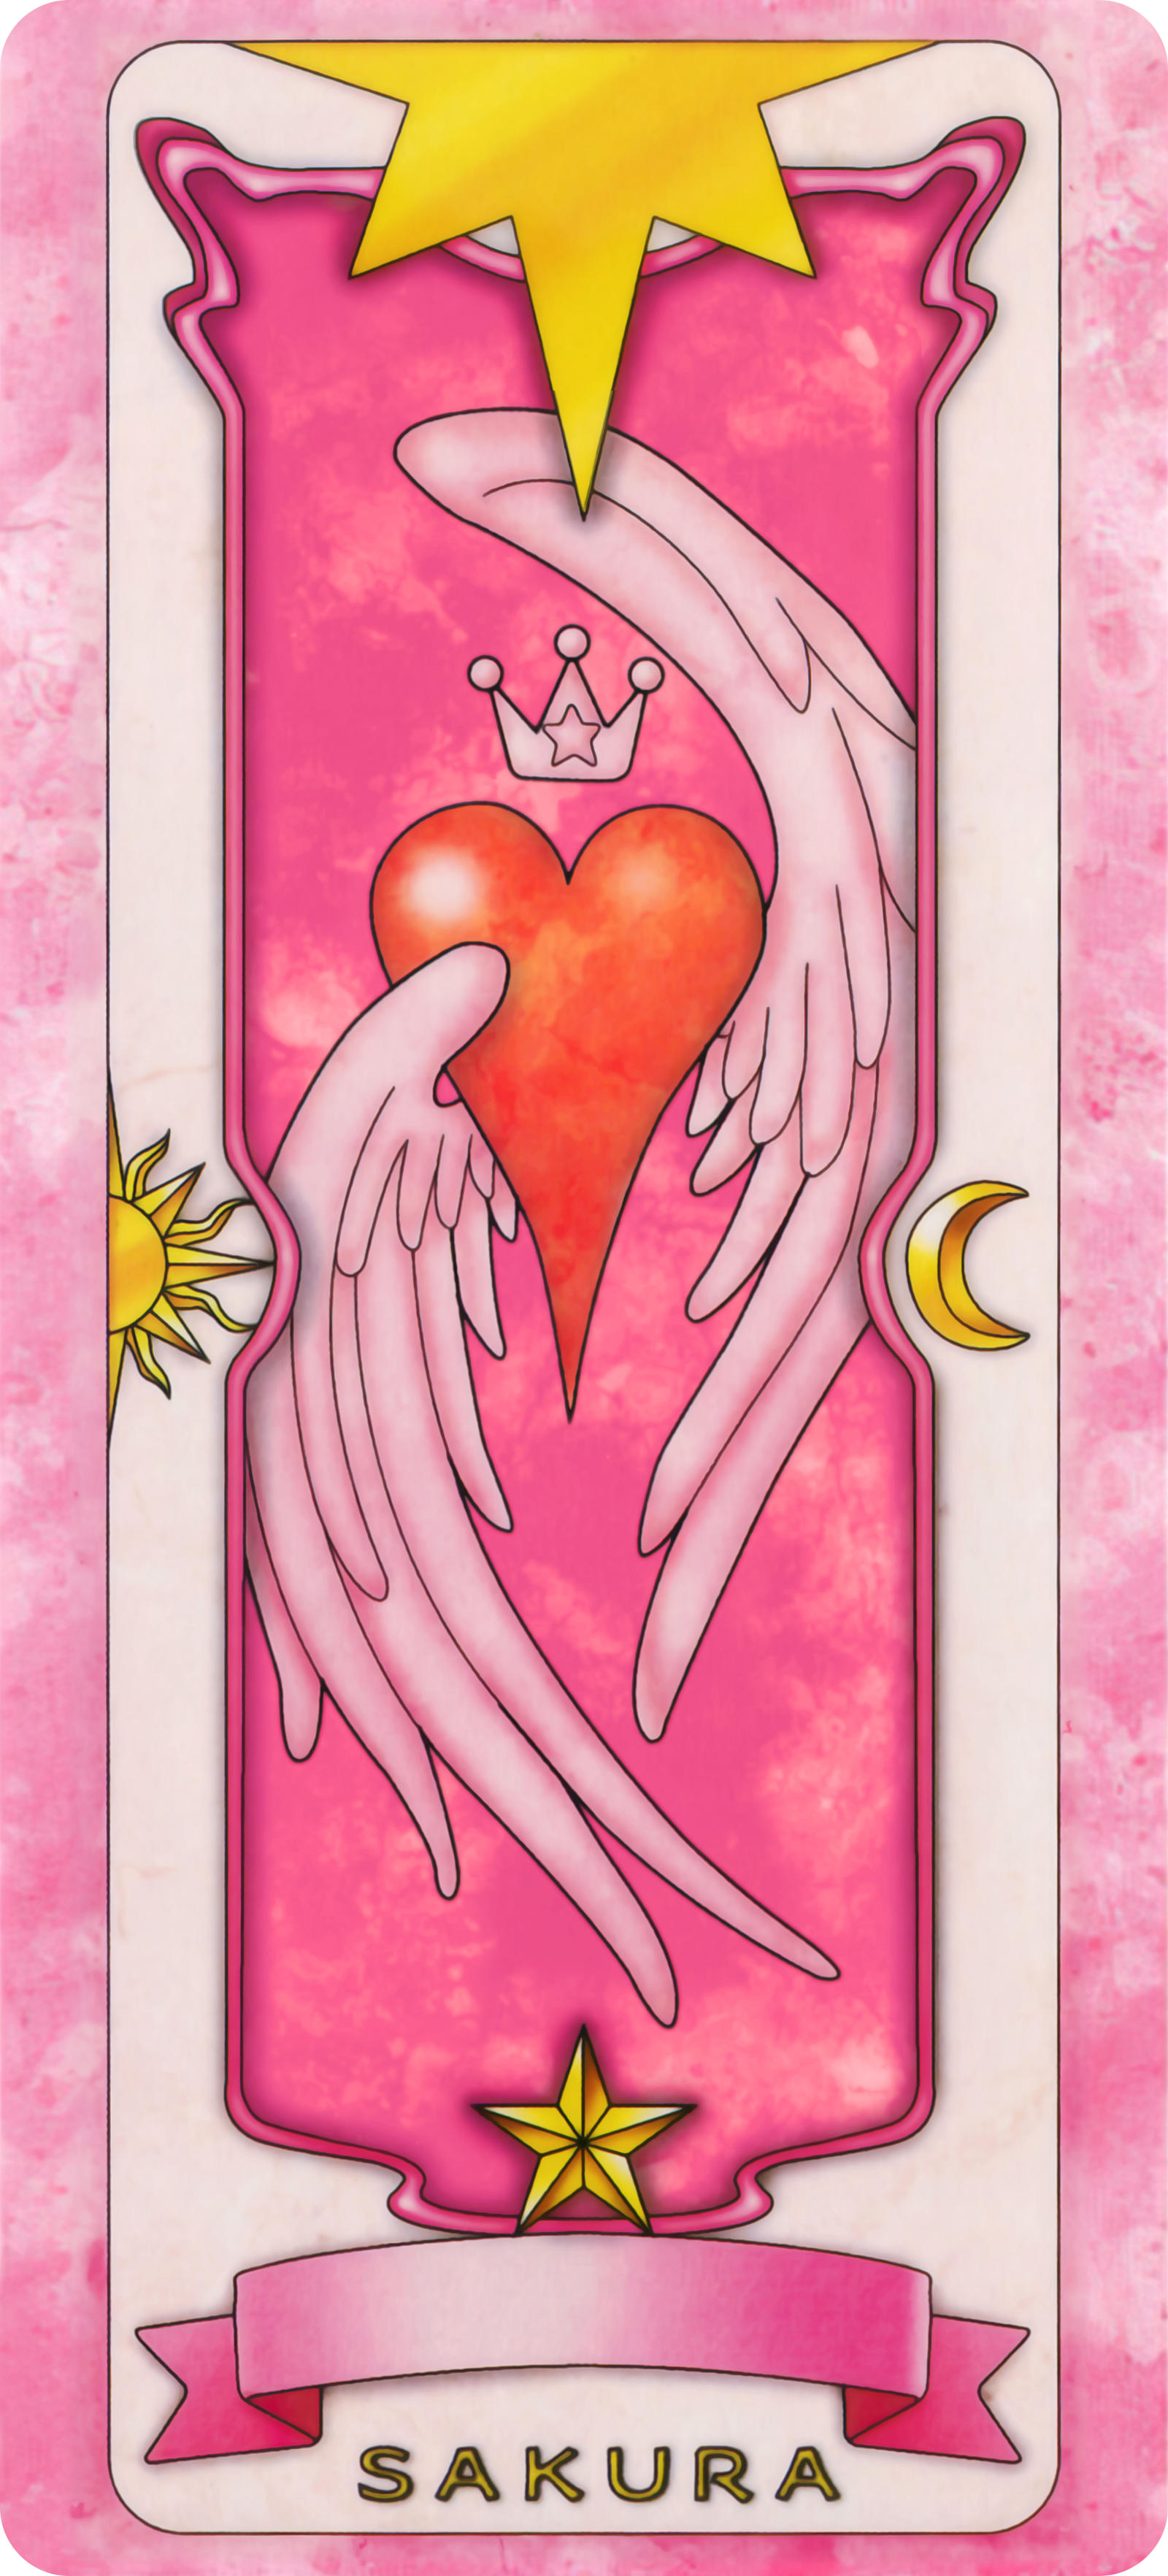 Cardcaptor Sakura: Clear Card Season 2 Poster by Joshuat1306 on DeviantArt